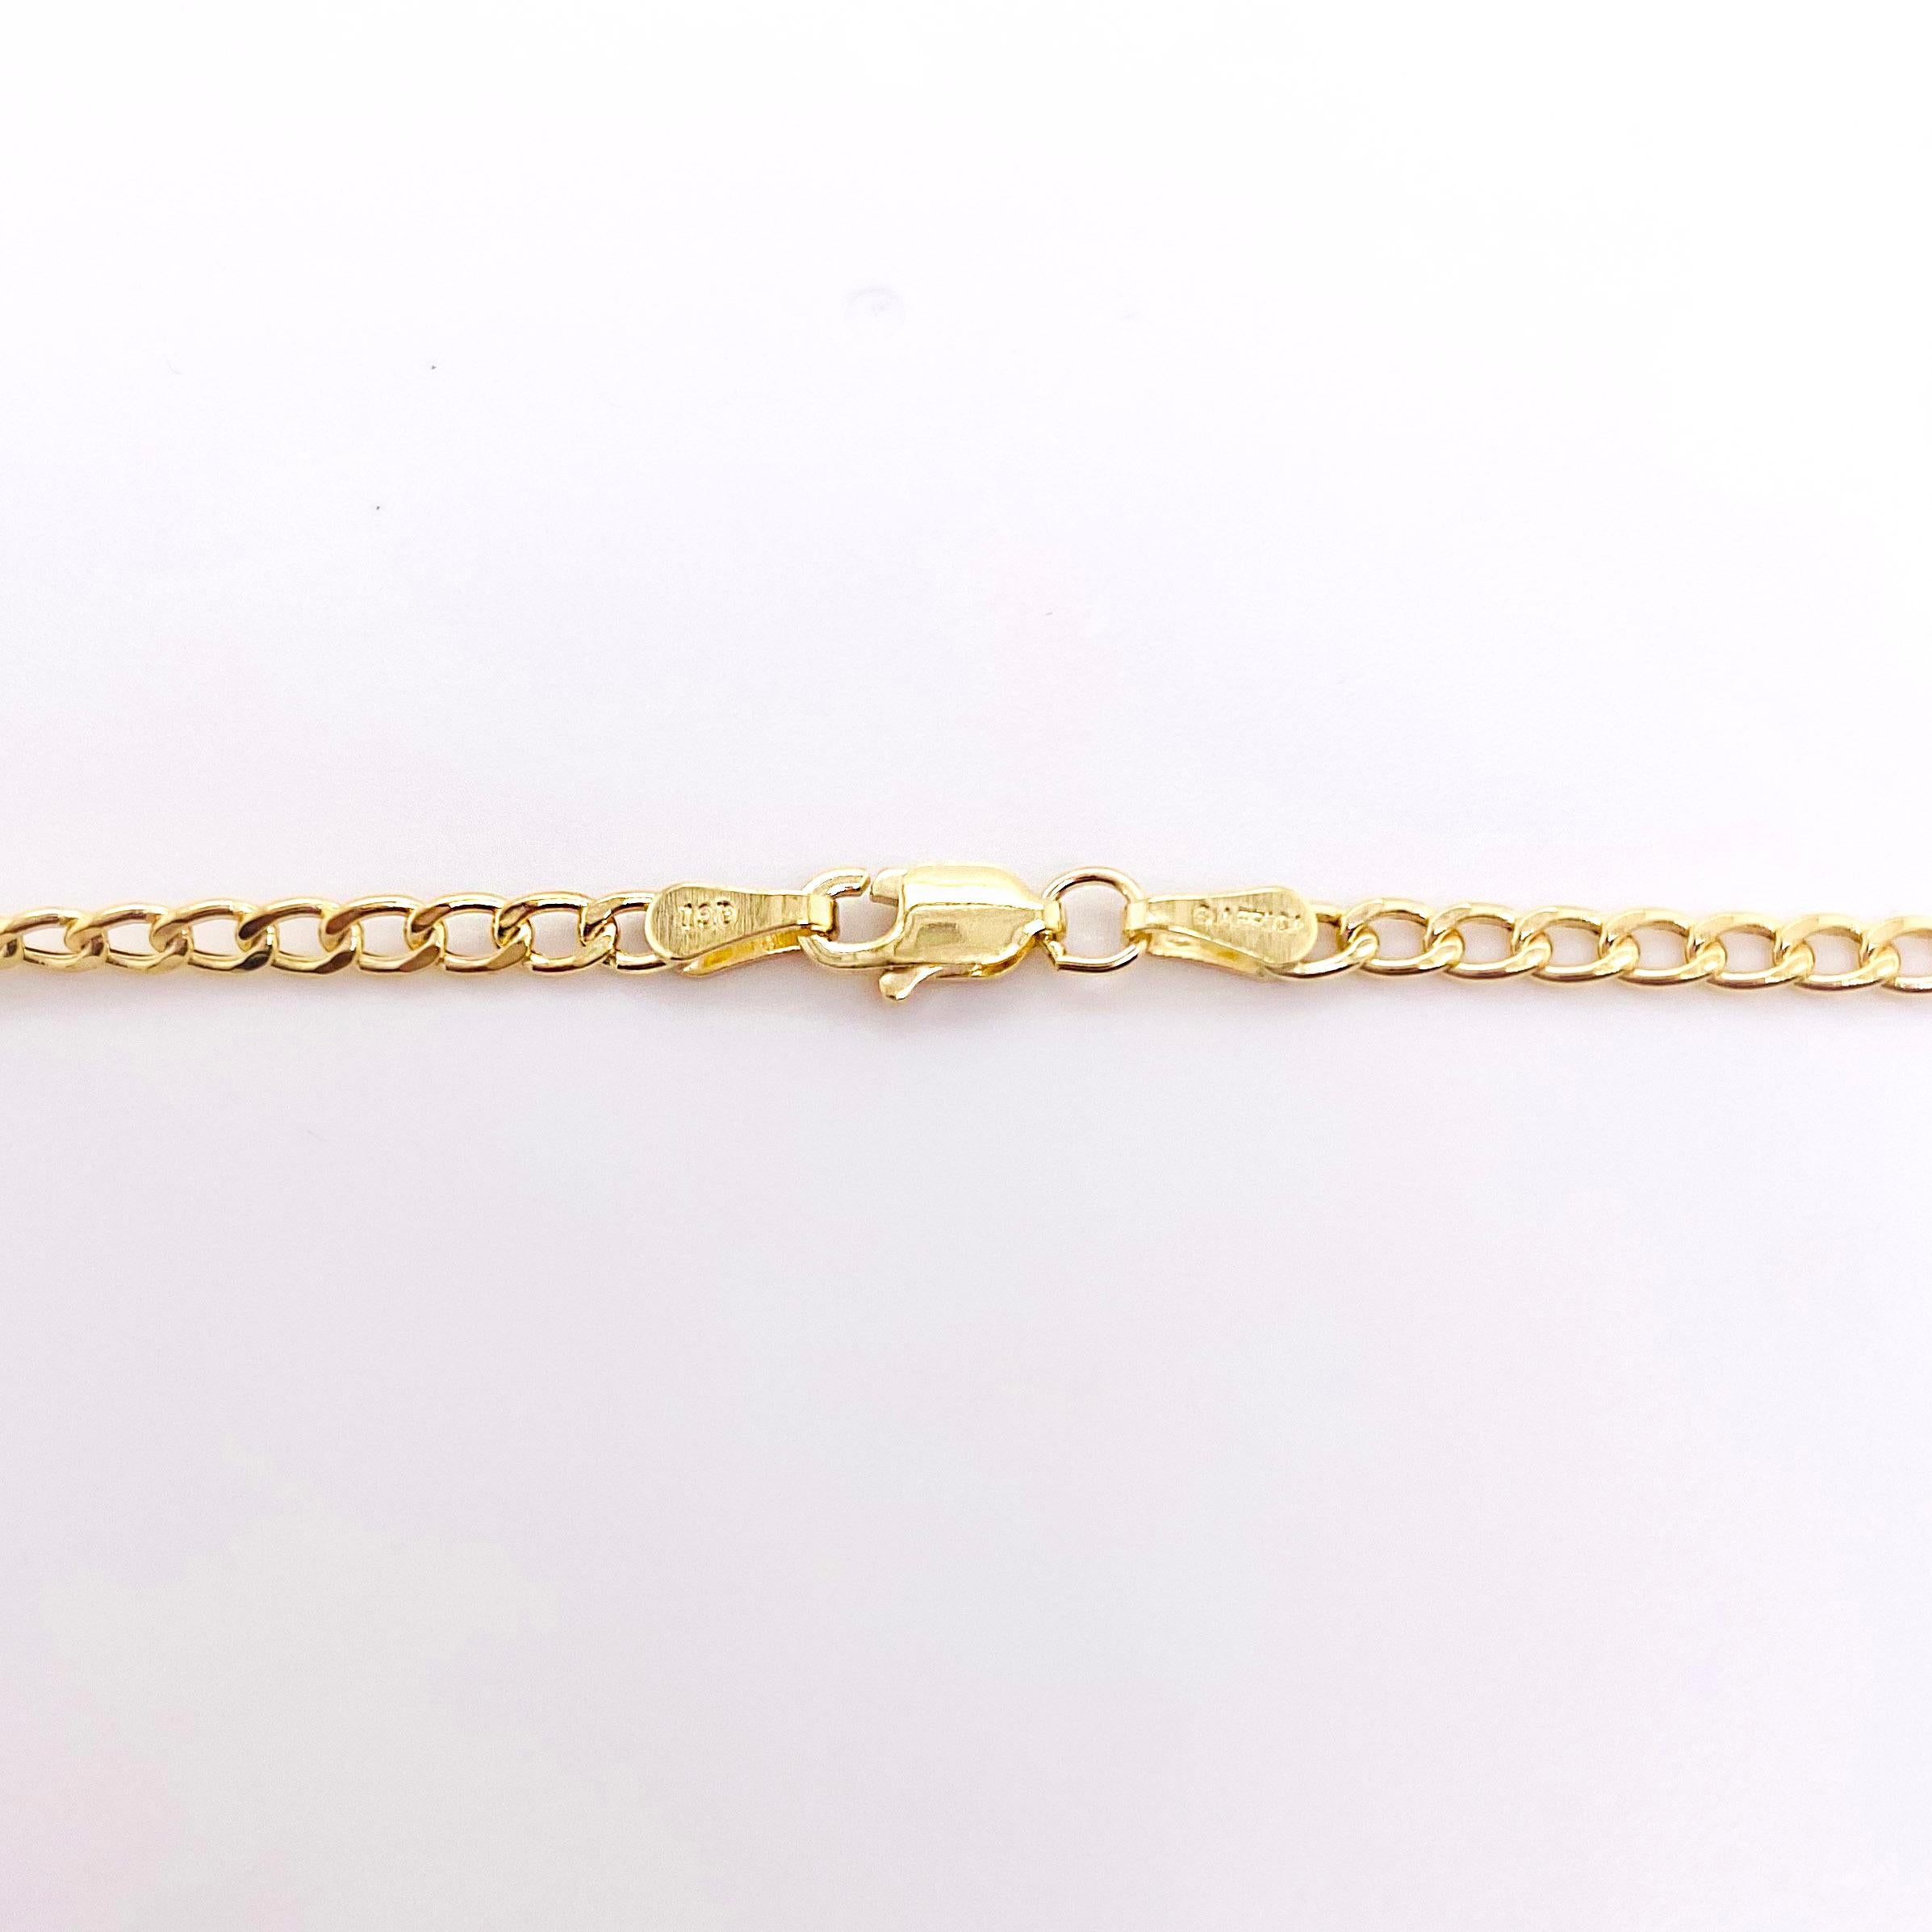 14 inch cuban link chain